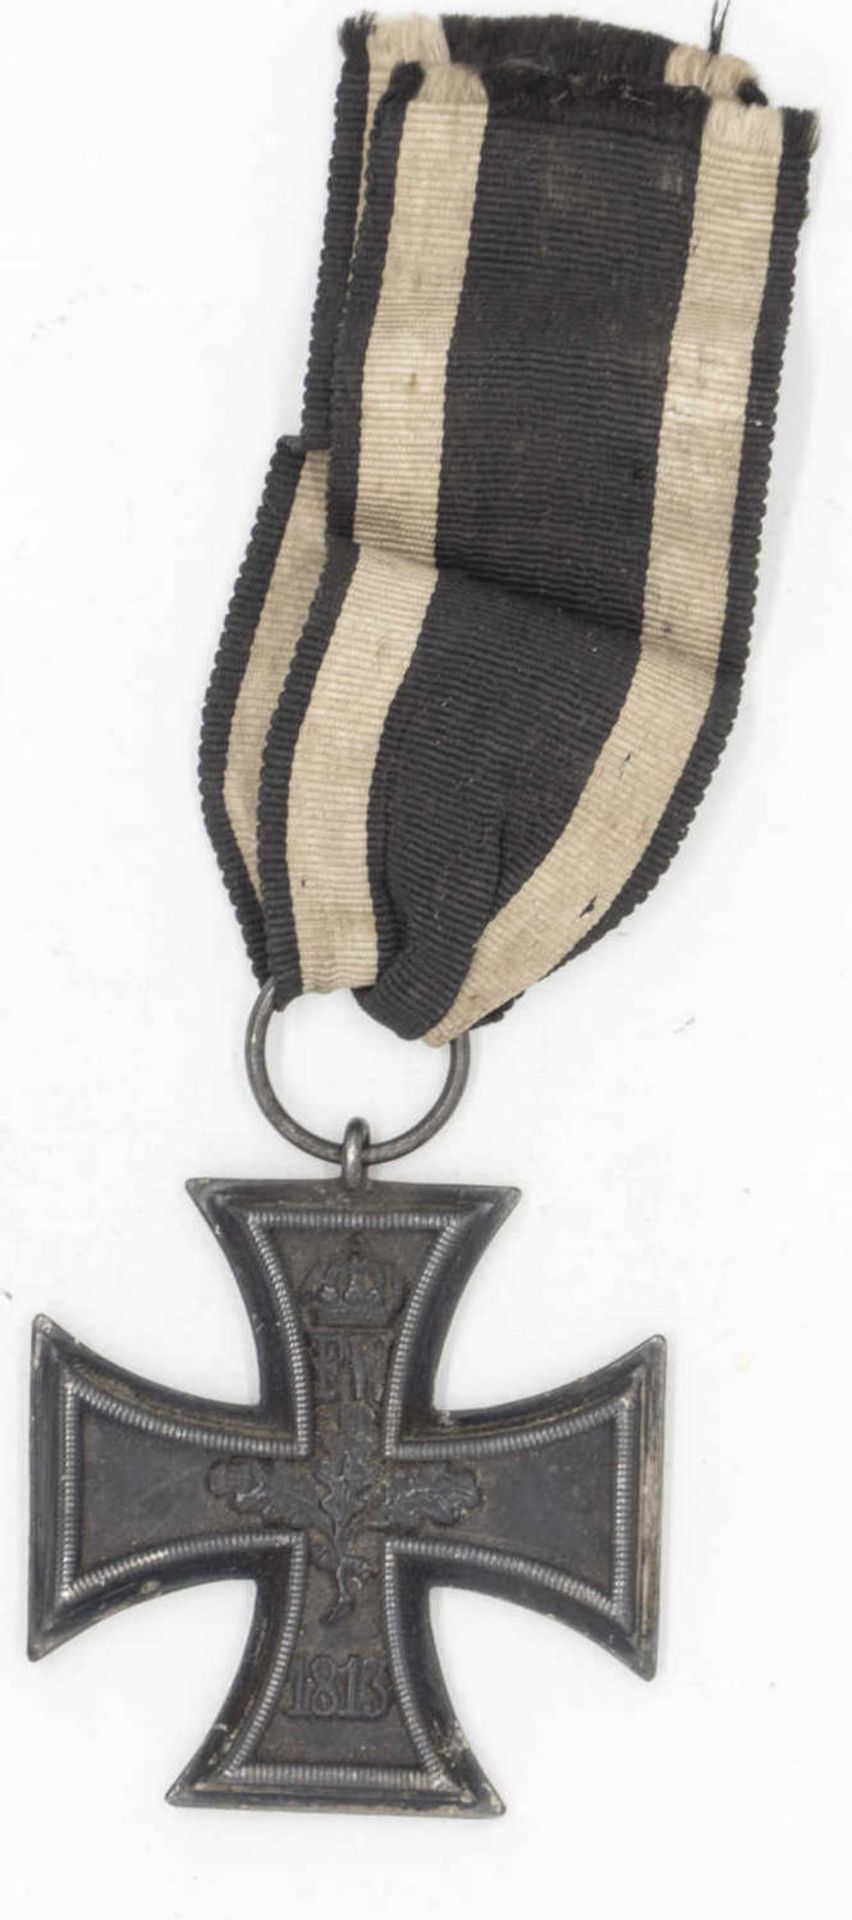 Eisernes Kreuz 2. Klasse am Band. 1. WK.Iron cross 2nd class on a ribbon. WW1. - Bild 2 aus 2